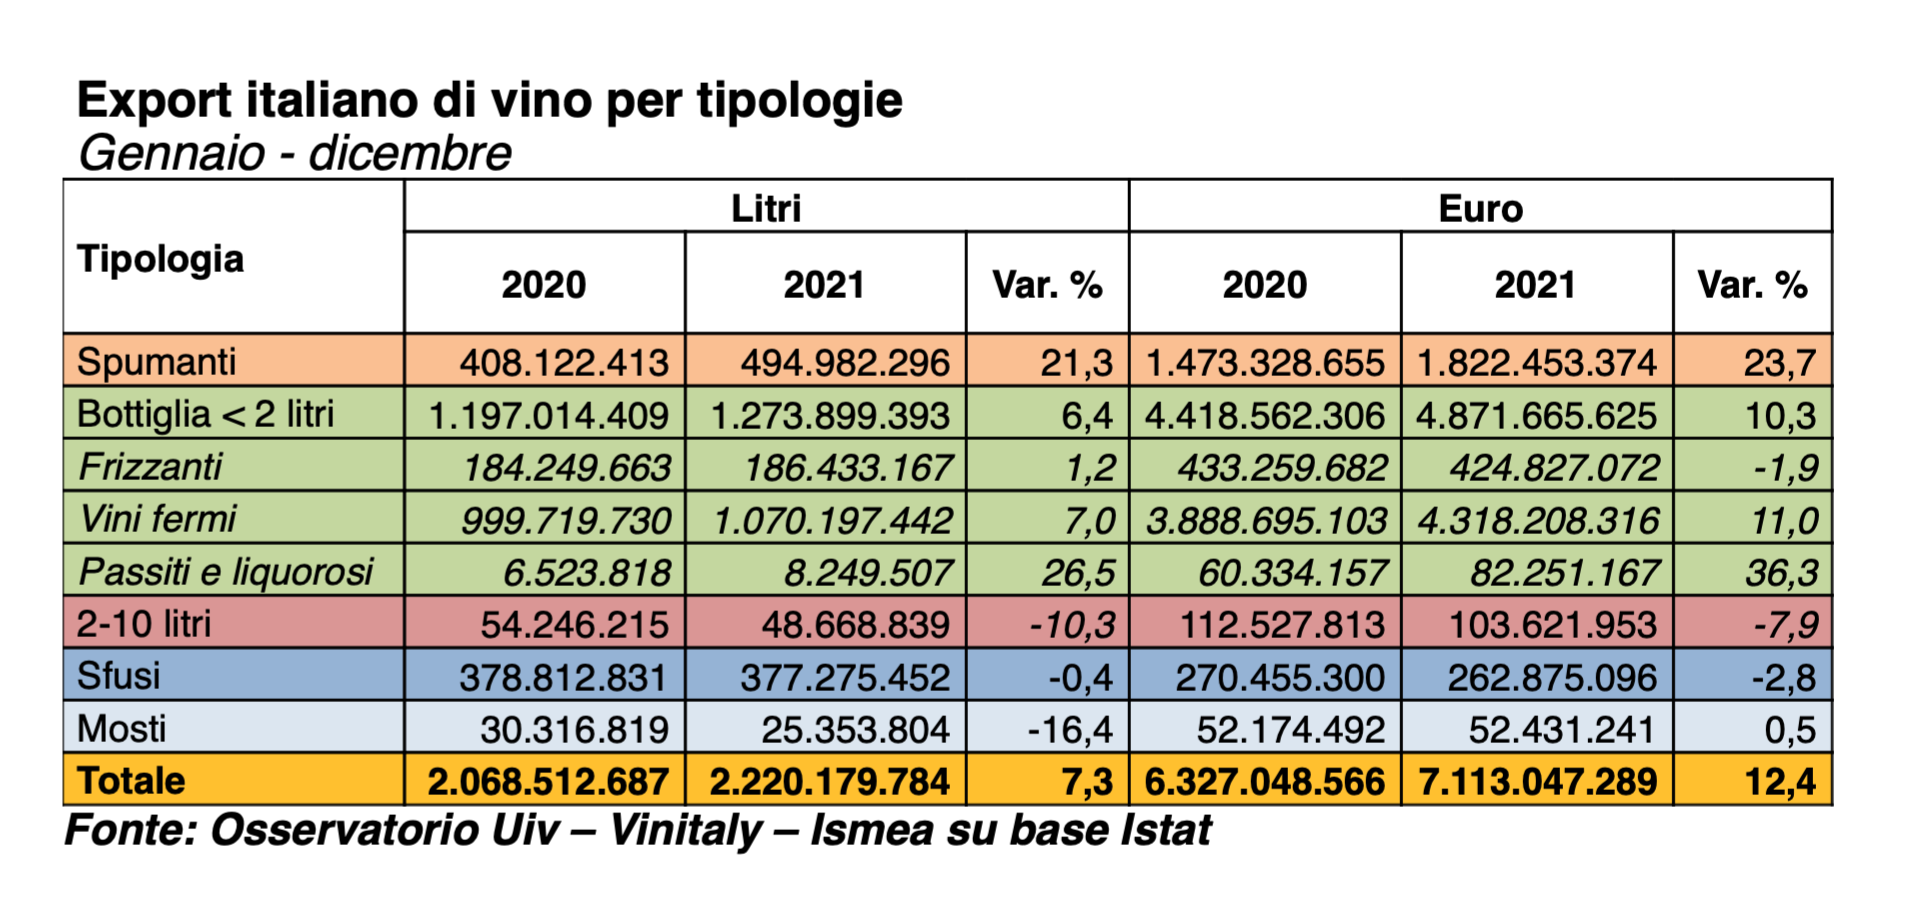 Export italiano vino per tipologie